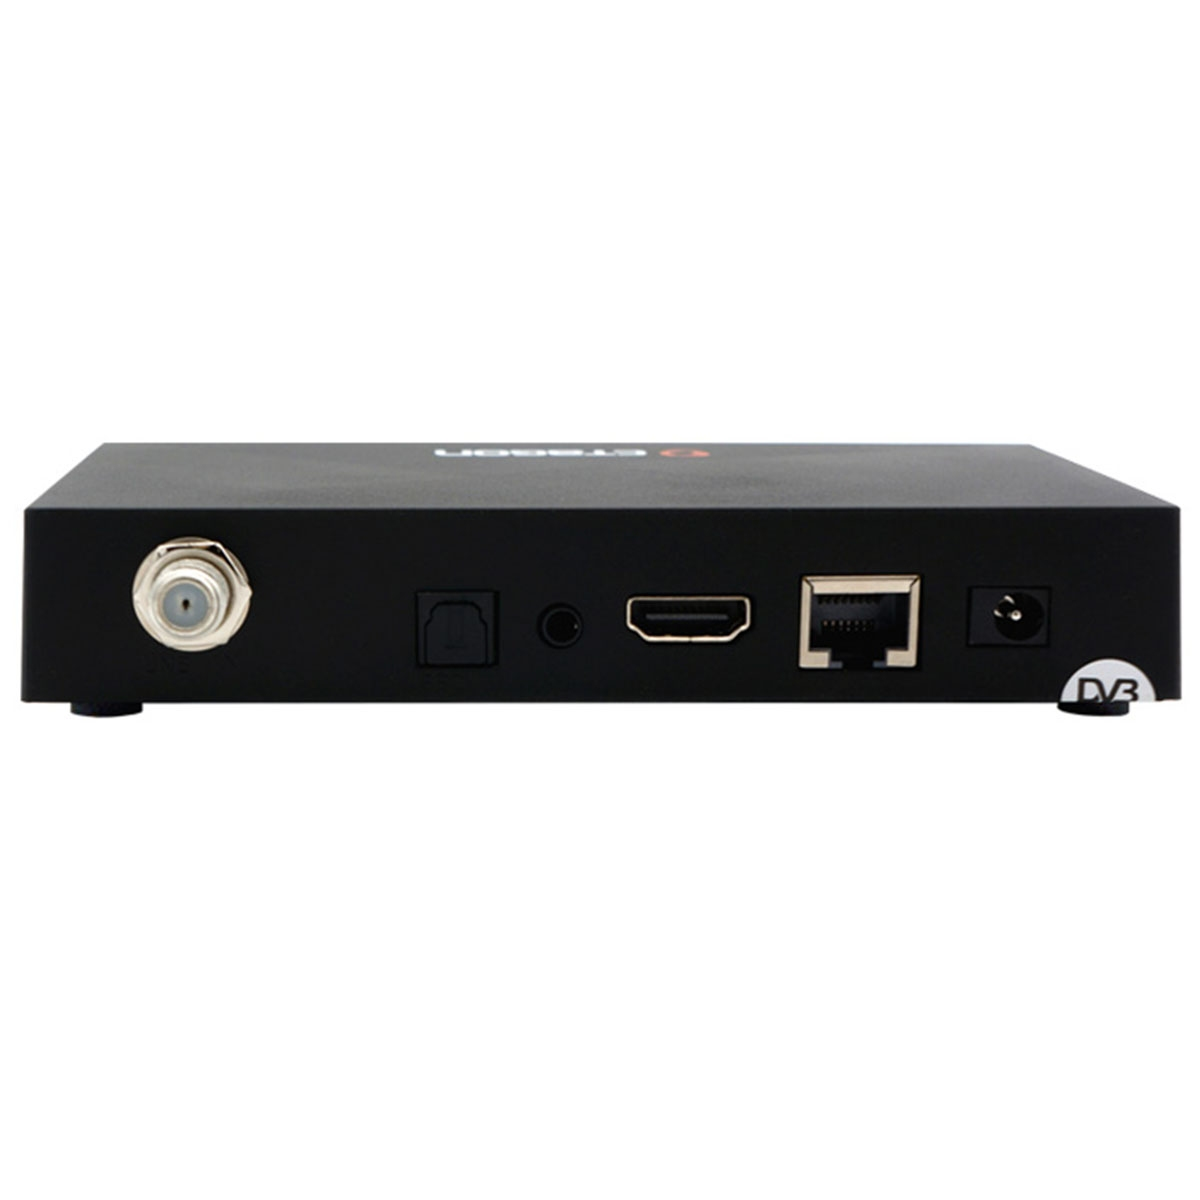 Receiver Tuner LAN IP HDMI OCTAGON (Schwarz) Receiver Sat HD Sat IP SX89 DVB-S2 H.265 Linux Full